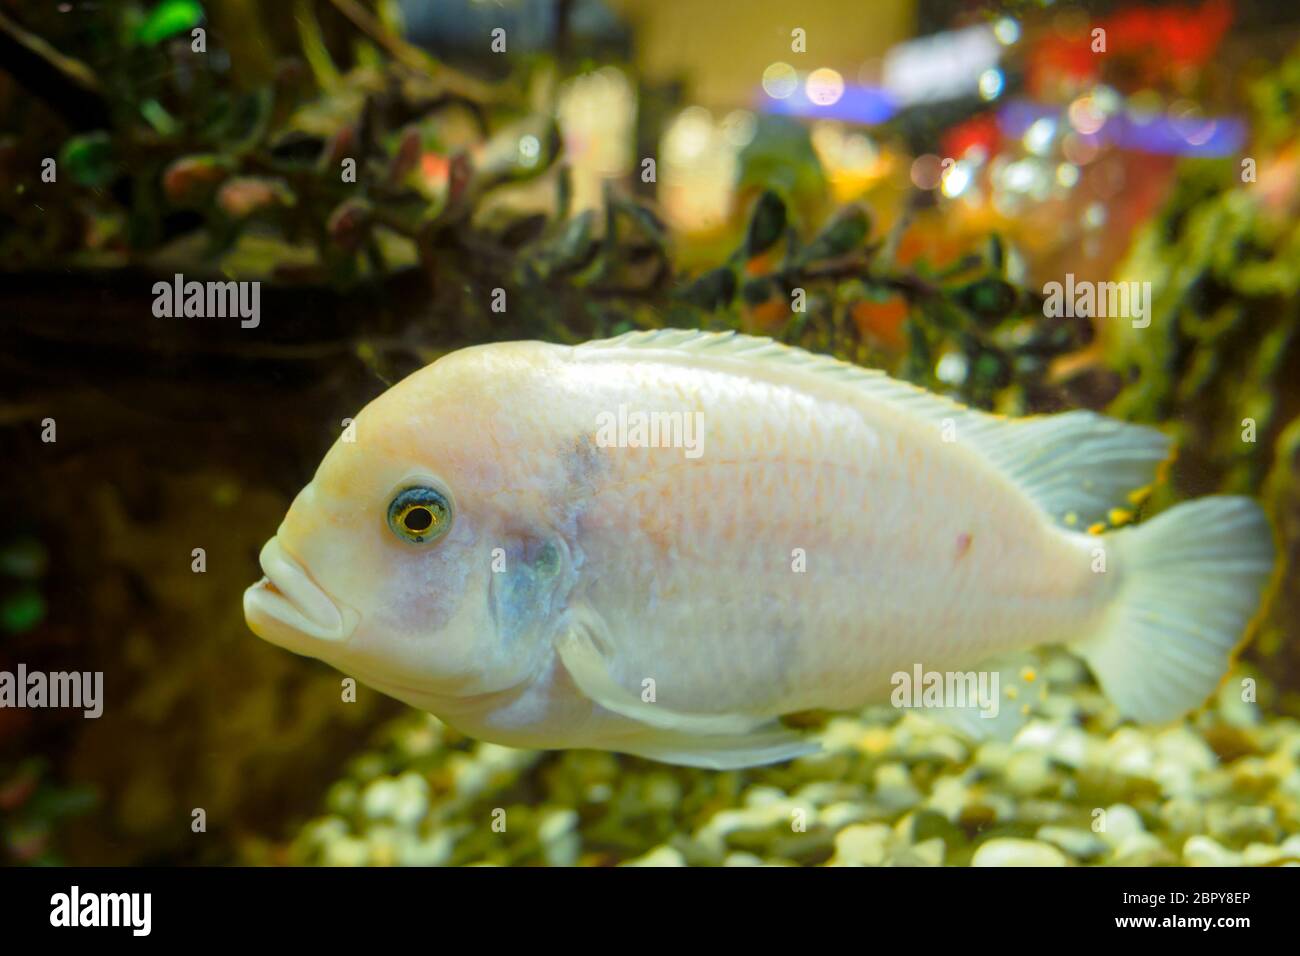 Oscar Albino Fish, Astronotus Oscellatus white fish swimming in the aquarium Stock Photo